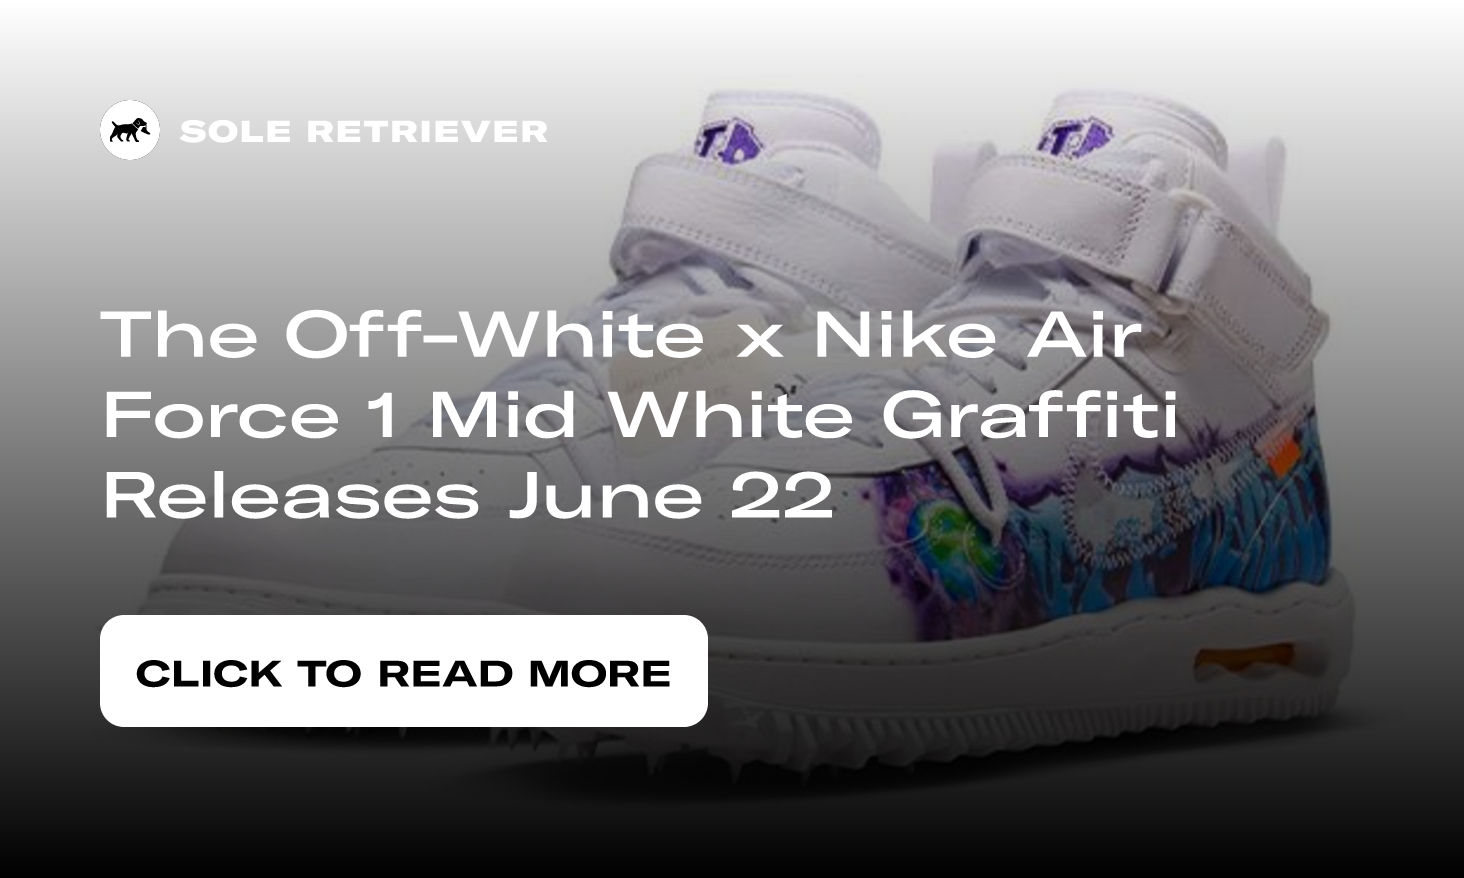 Louis Vuitton Nike Air Force 1 Low By Virgil Abloh White Blue – YankeeKicks  Online